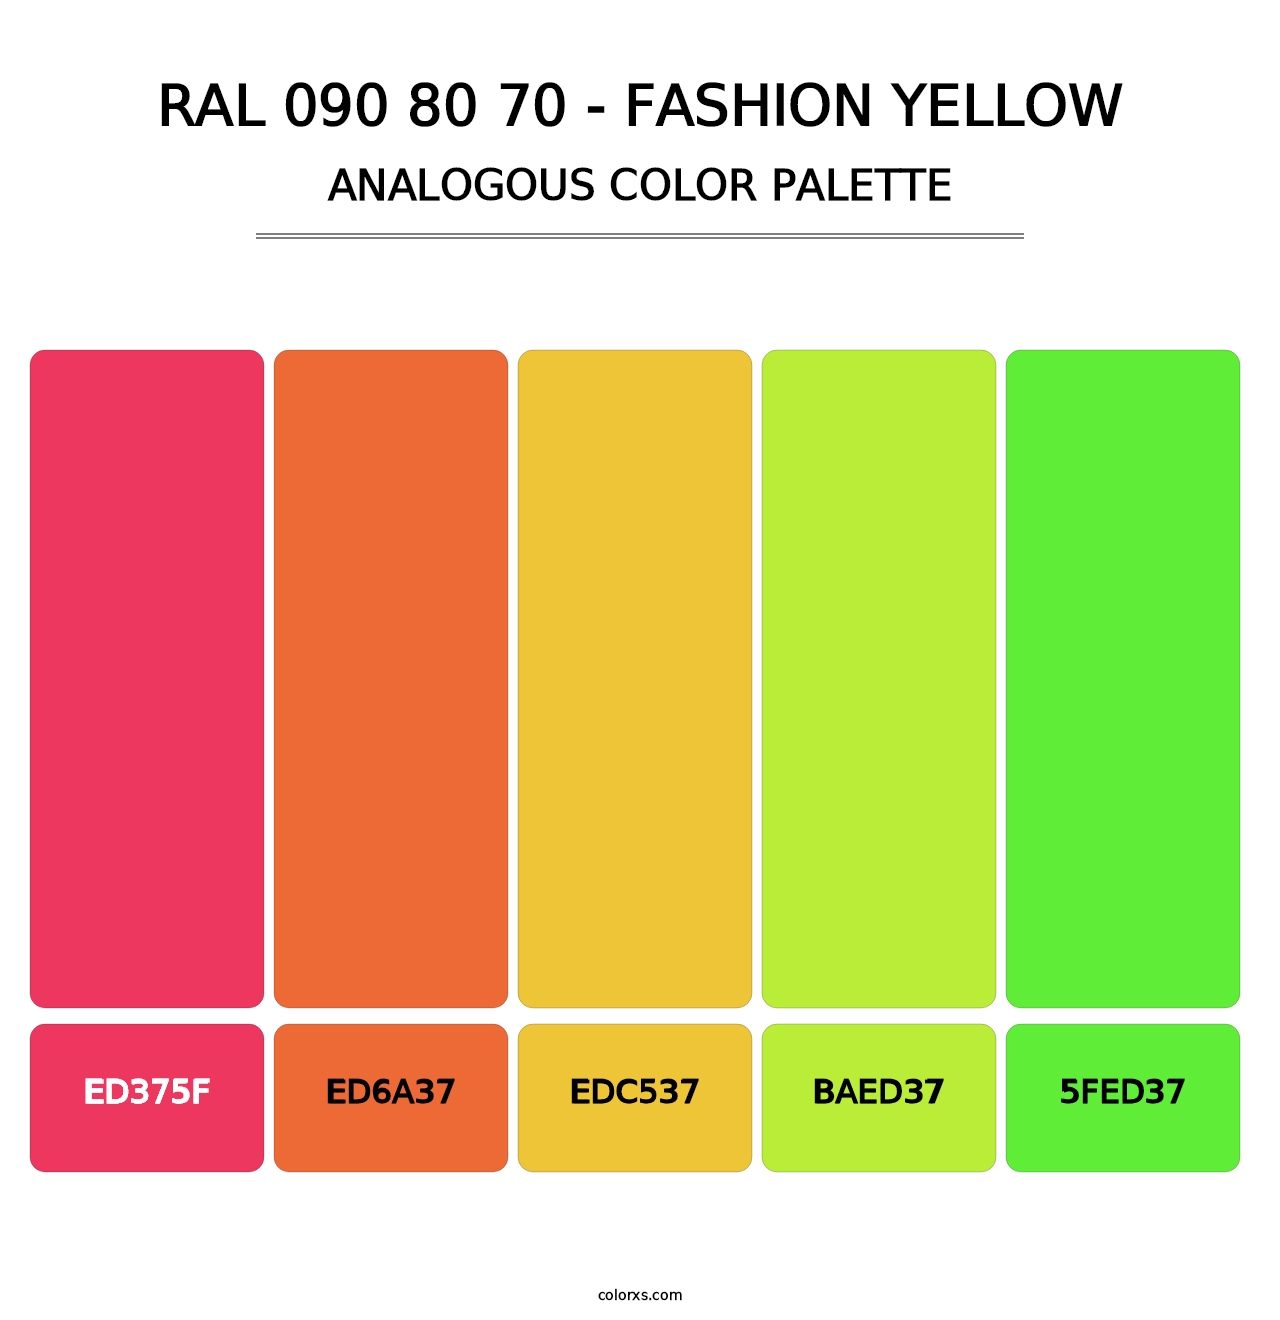 RAL 090 80 70 - Fashion Yellow - Analogous Color Palette